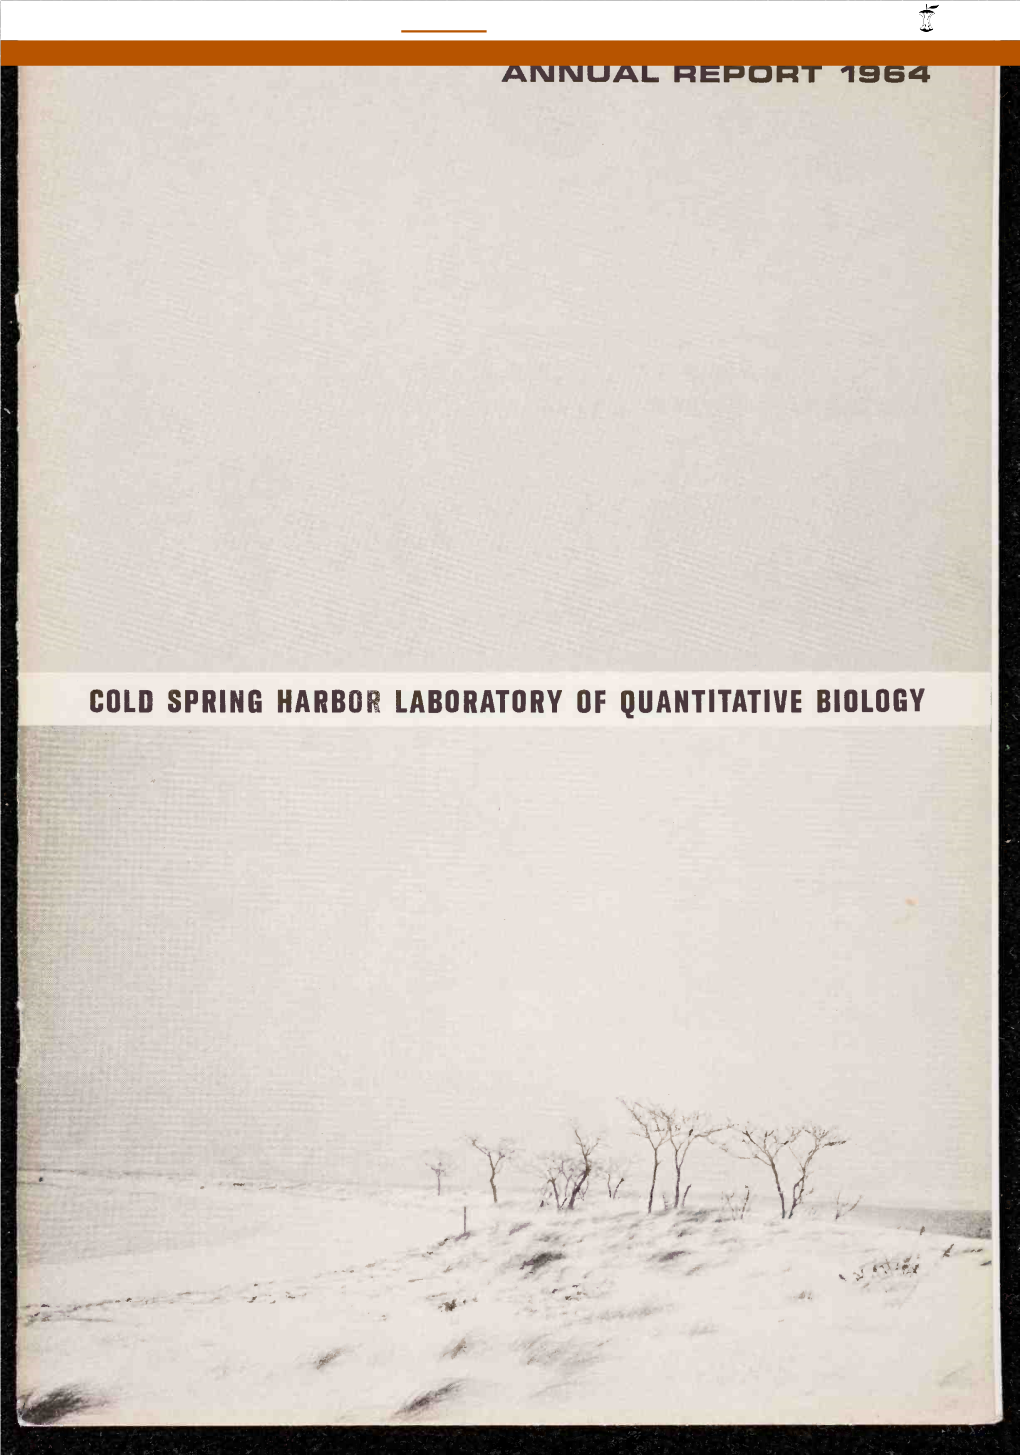 Cold Spring Harbor Laboratory of Quantitative